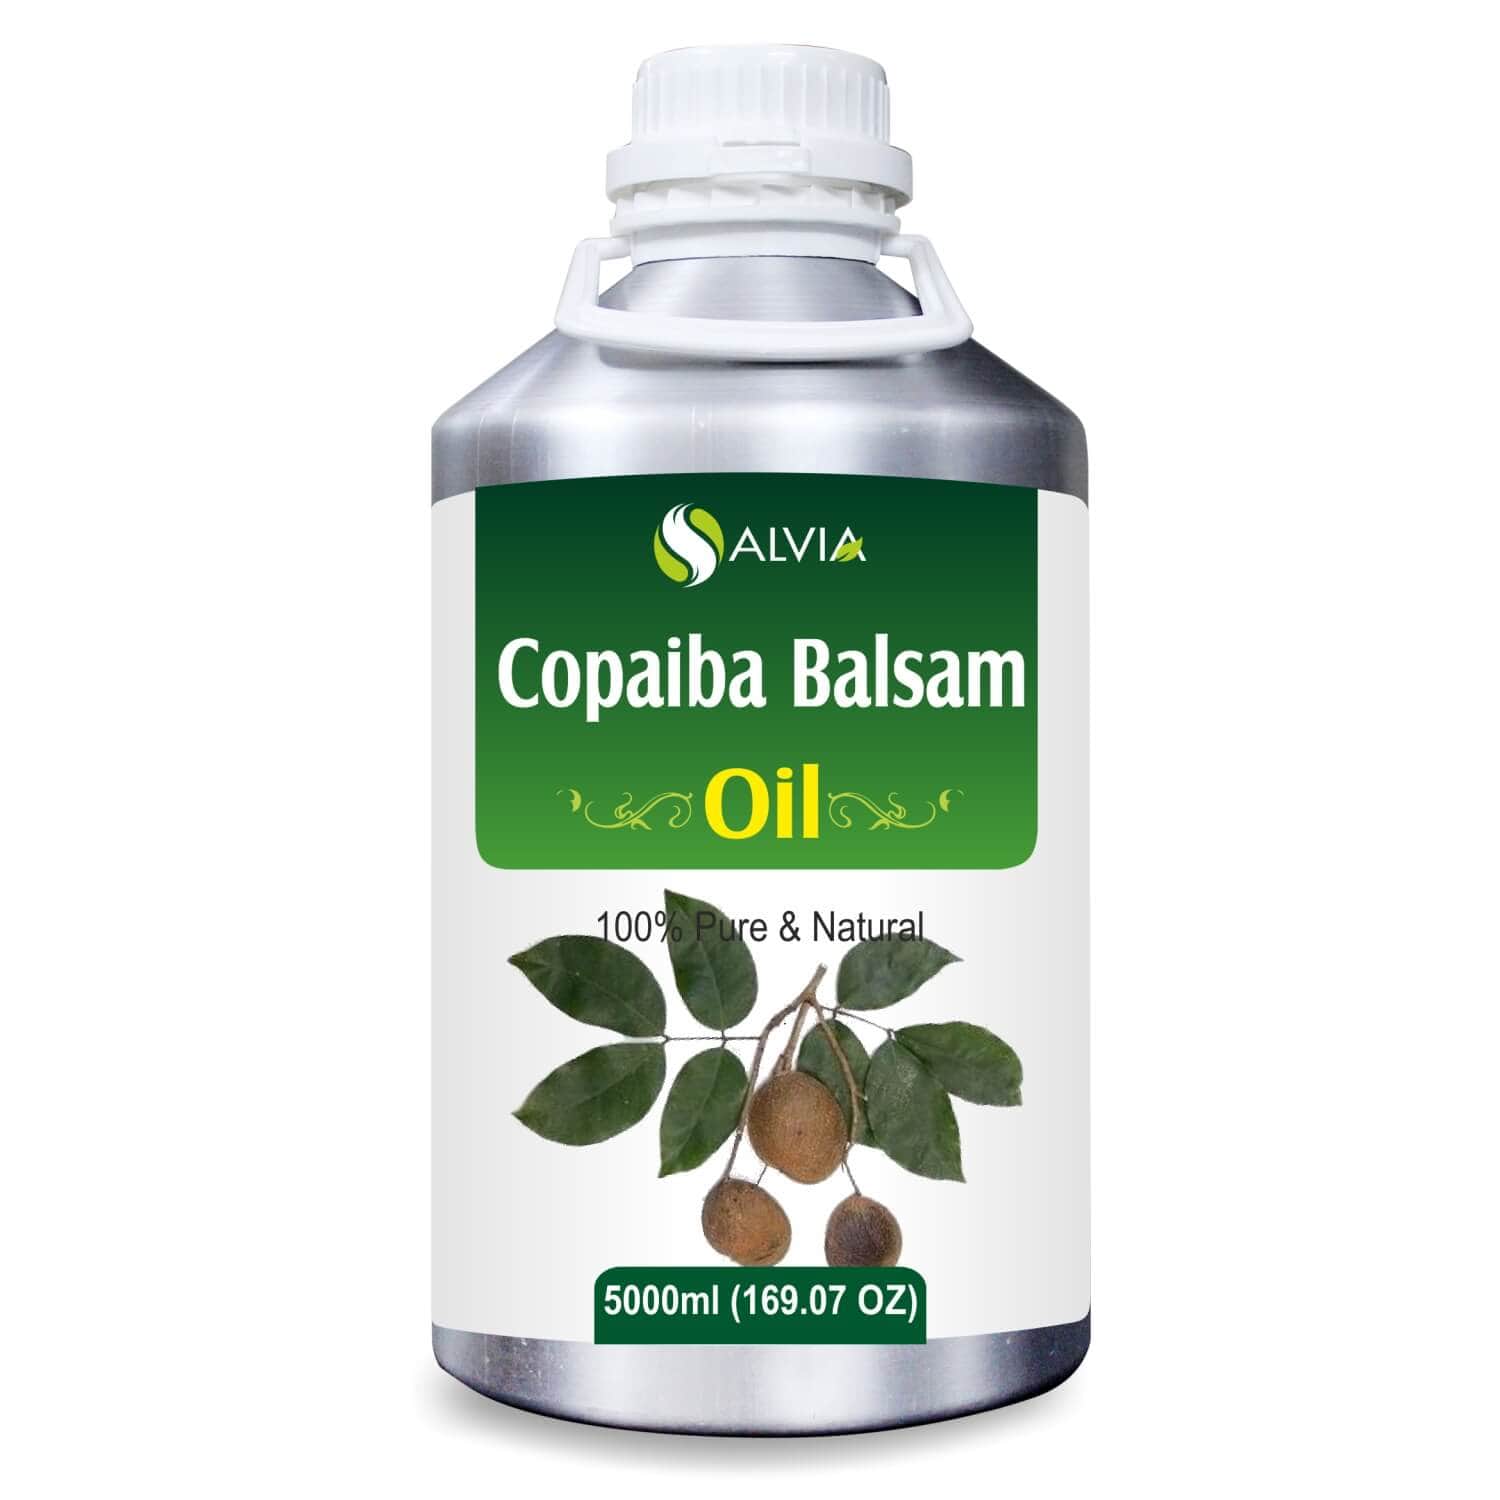 Salvia Natural Essential Oils 5000ml Copaiba Balsam Oil (Copaifera langsdorffii) Pure Essential Oil Premium Therapeutic Grade Aids in Wound Healing, Prevents Acne, Wrinkles, Tightens Muscles